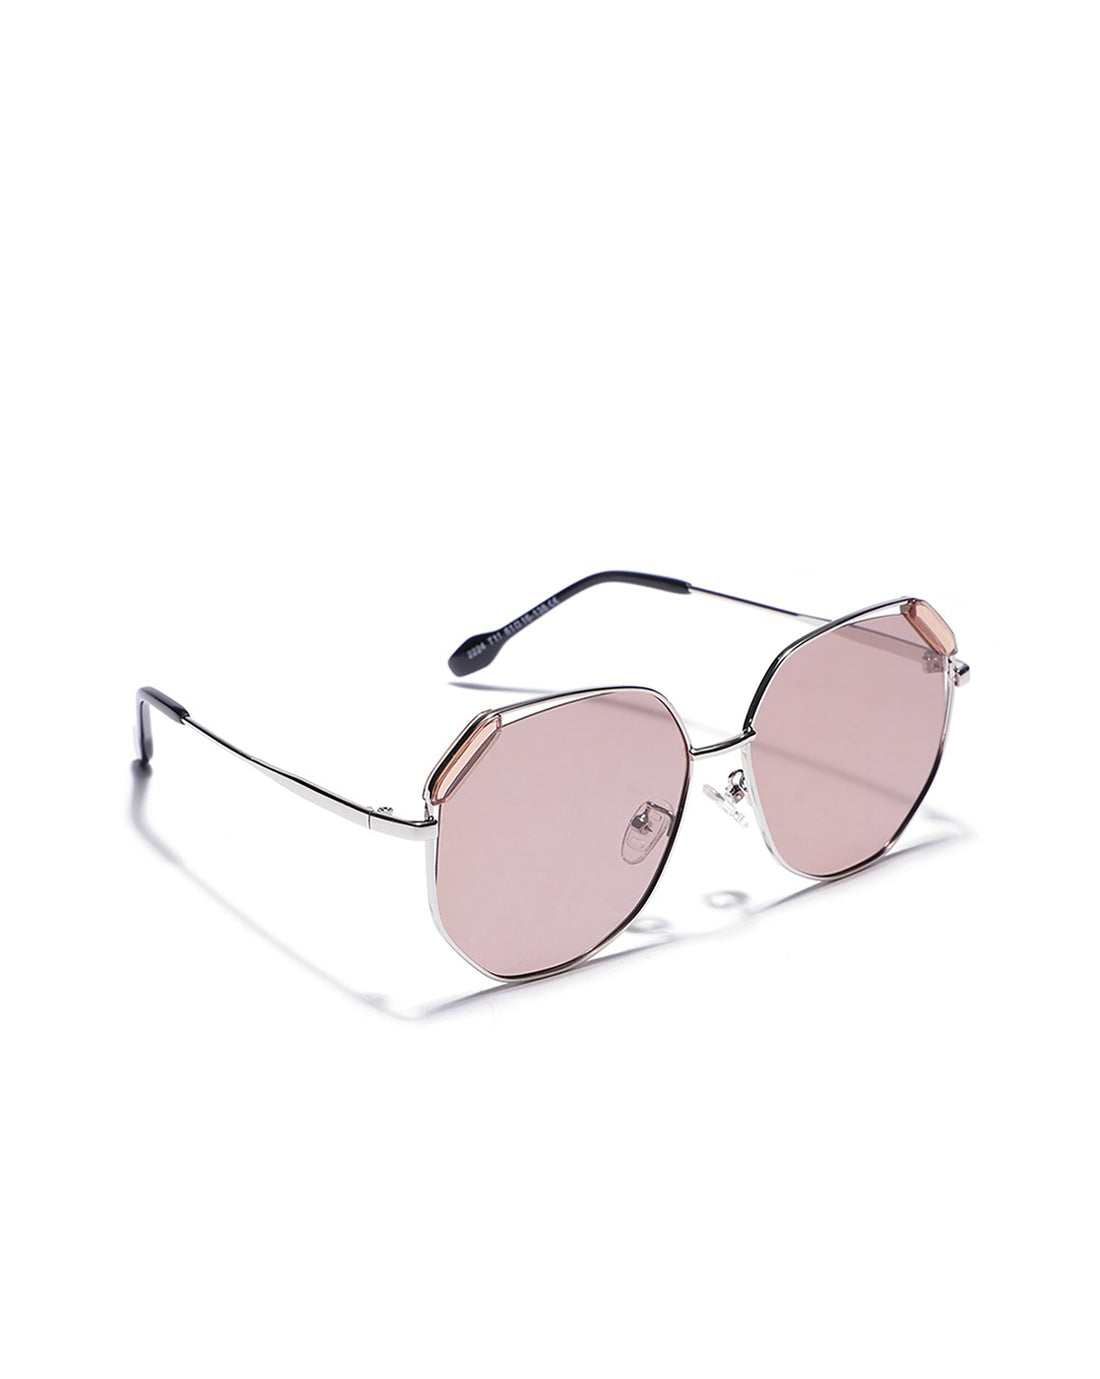 Carlton London Unique/Distinctive Sunglasses With Uv Protected Lens For Women